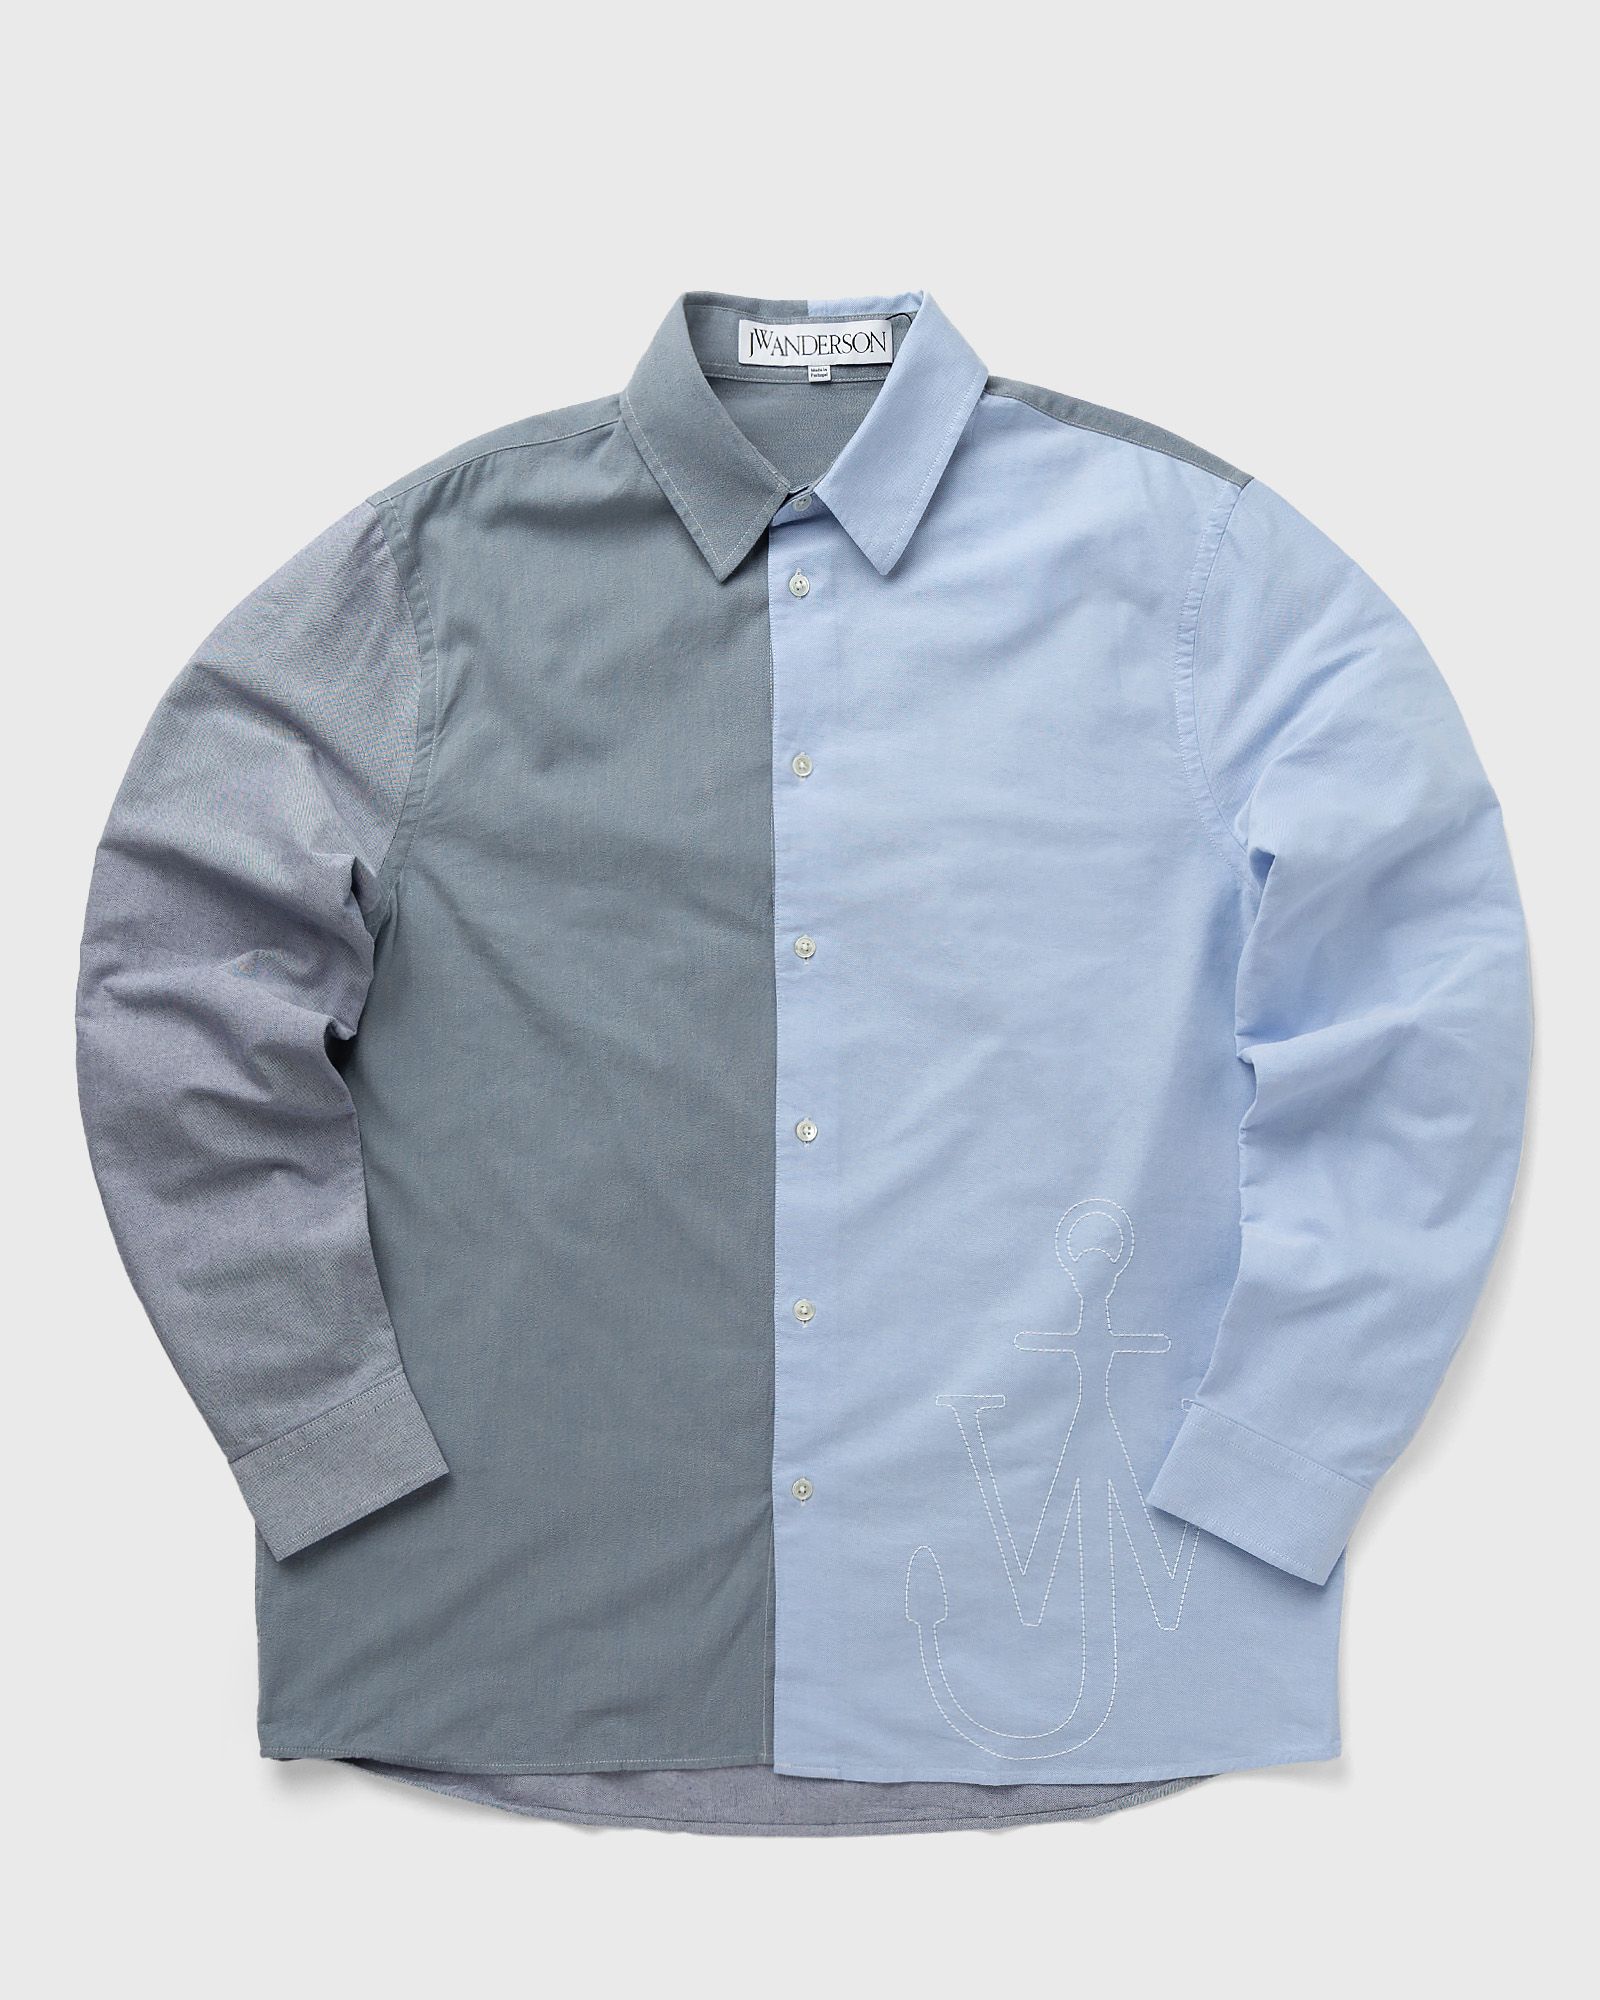 JW Anderson - anchor classic fit patchwork shirt men longsleeves blue in größe:l